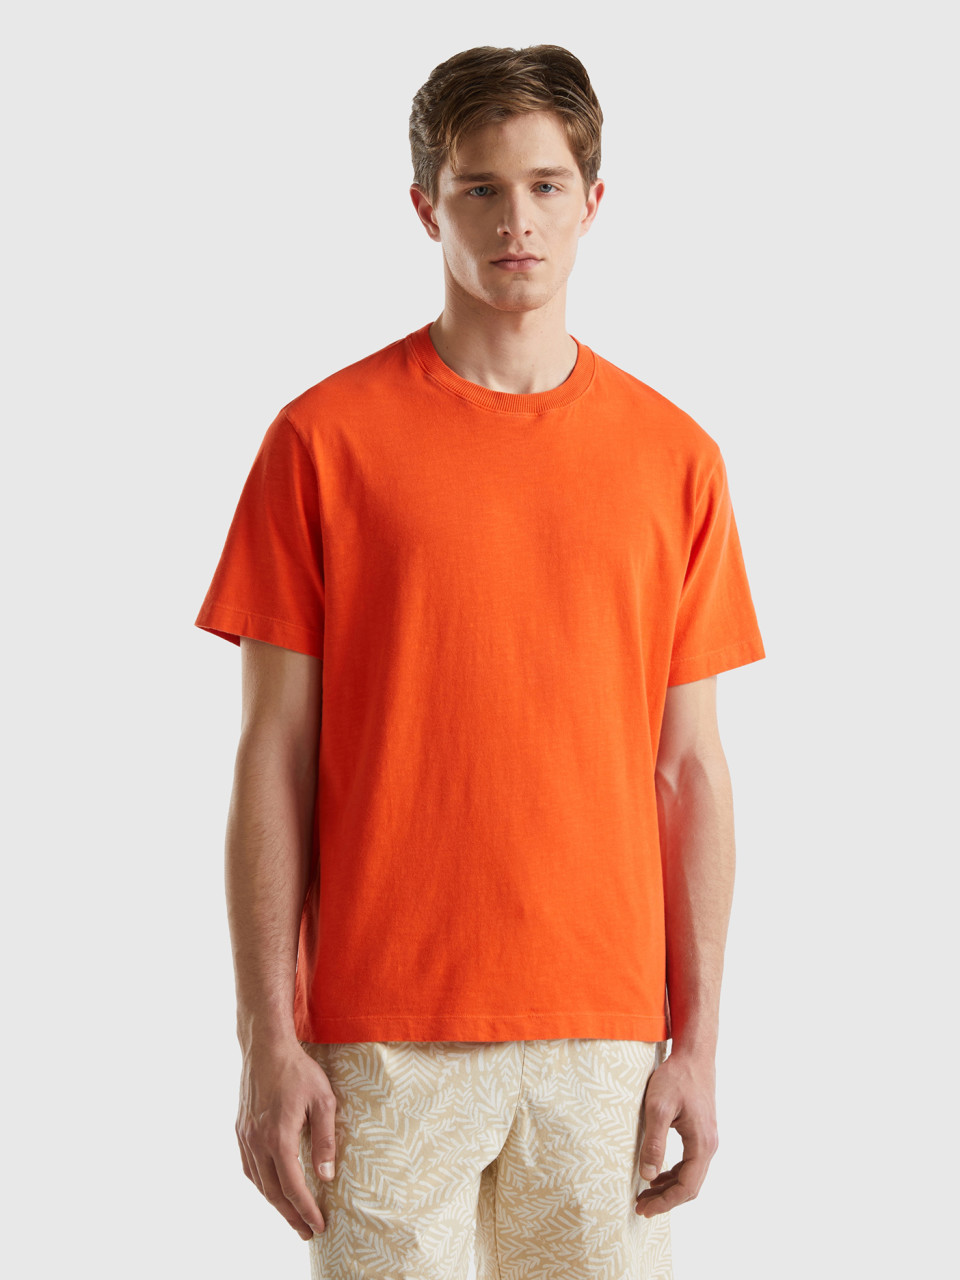 Benetton, Camiseta Ligera Relaxed Fit, Naranja, Hombre